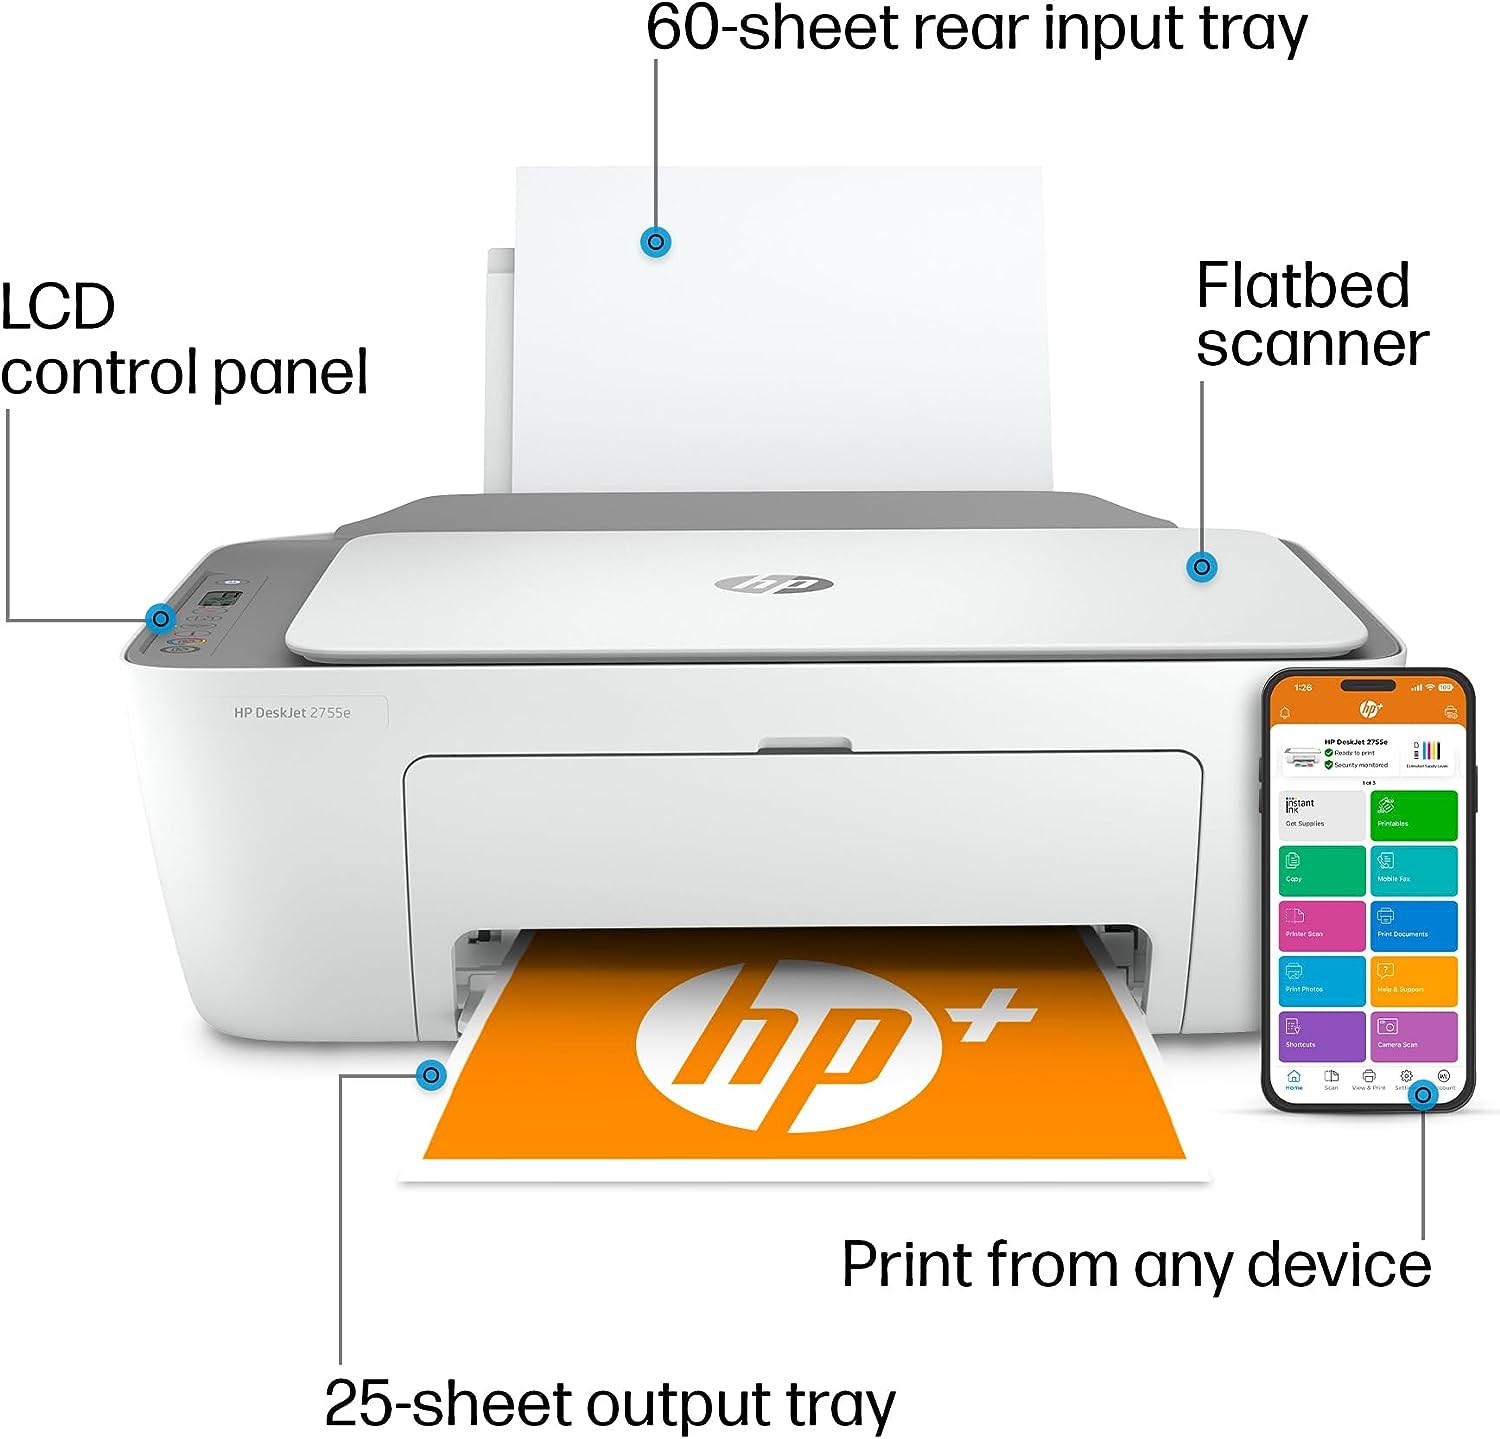 HP DeskJet 2755e Wireless All-In-One Color Printer - $55